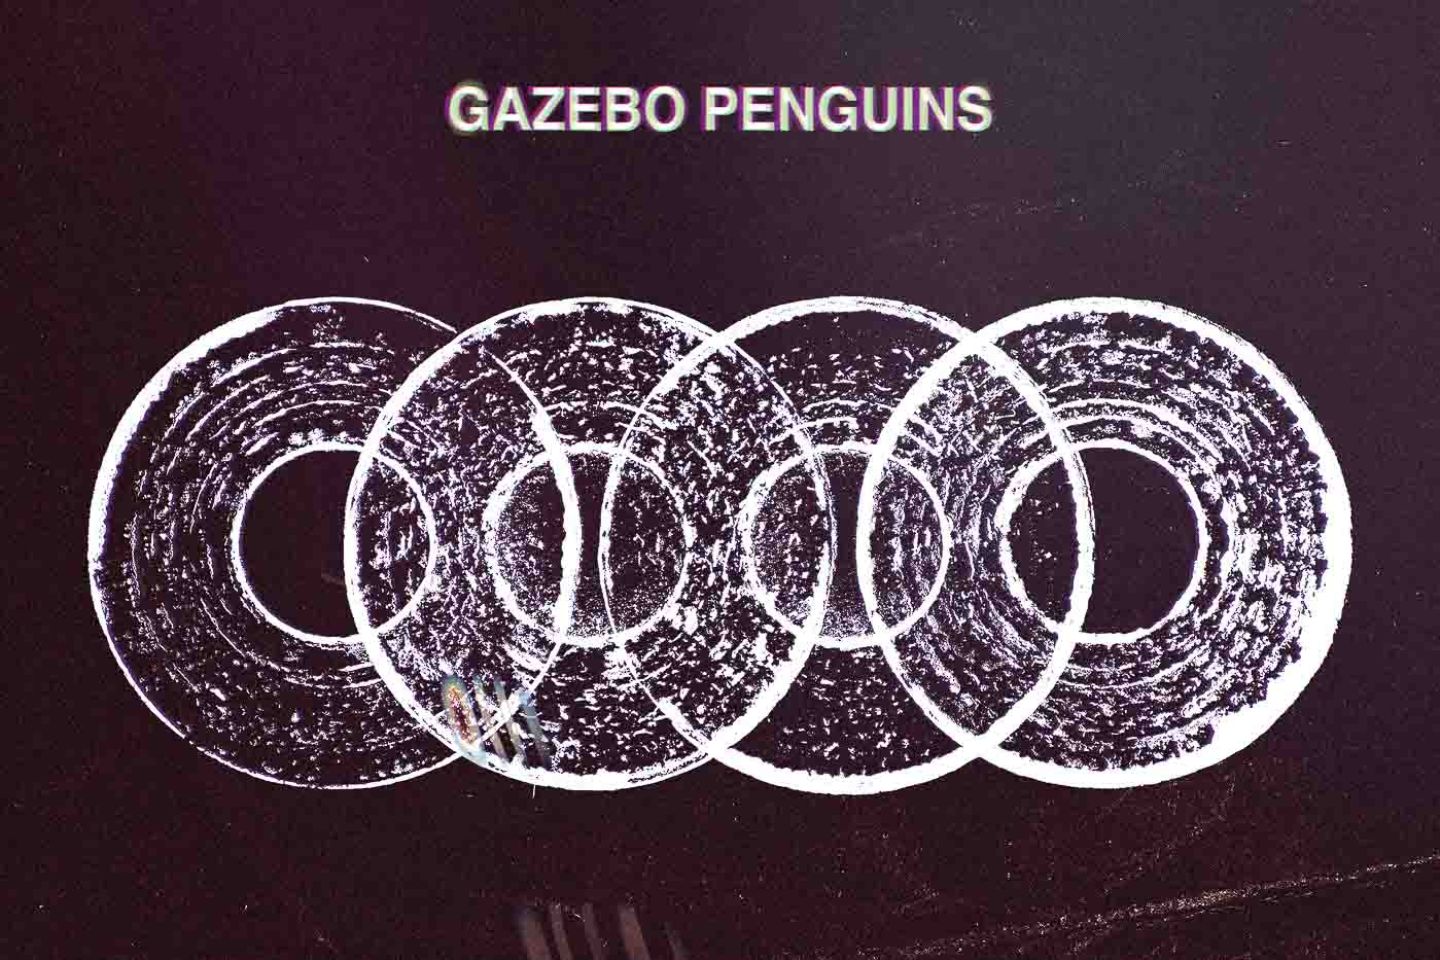 Gazebo Penguins “Quanto” (To Lose La Track / Garrincha Dischi, 2022)